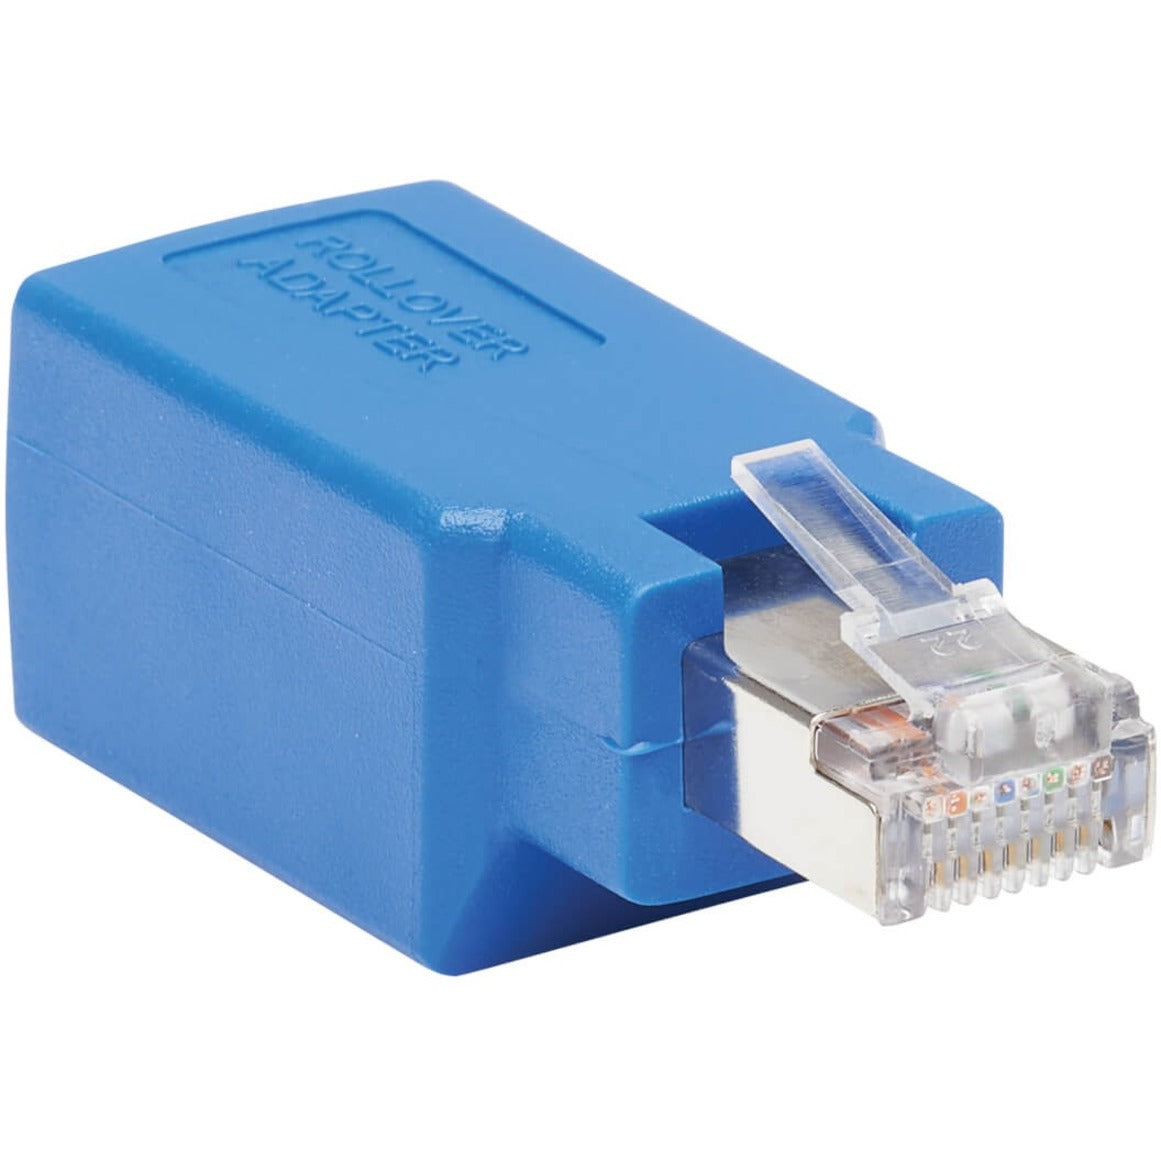 Tripp Lite N034-001-SH Cisco Serial Console Rollover Adapter (M/F) - RJ45 to RJ45, Shielded, Blue